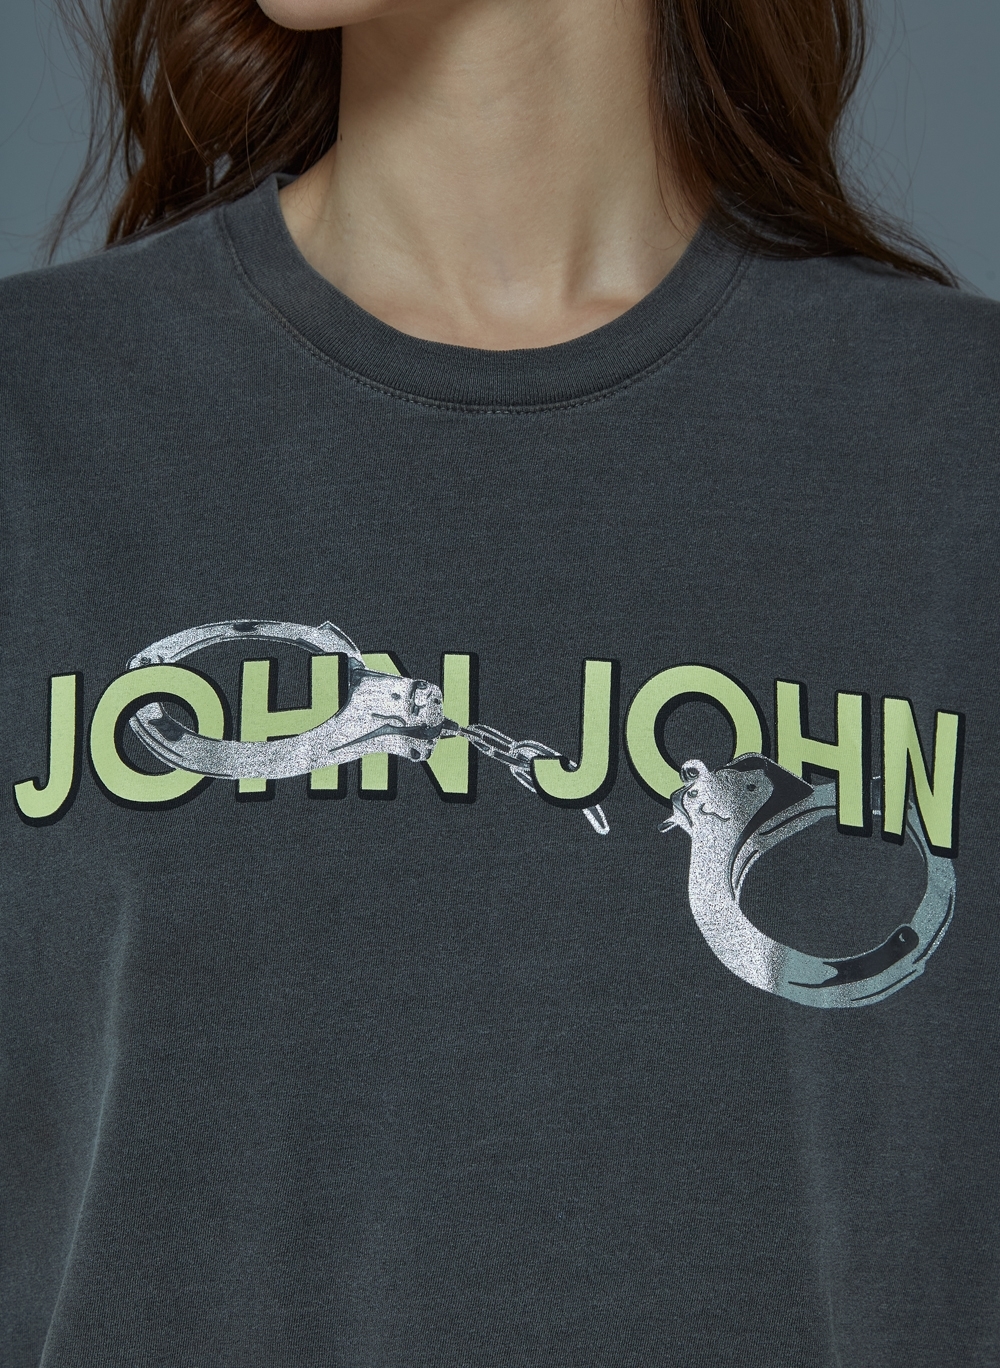 Camiseta John John Hancuff Feminina 03.62.0214 - Camiseta John John Hancuff  Feminina - JOHN JOHN FEM